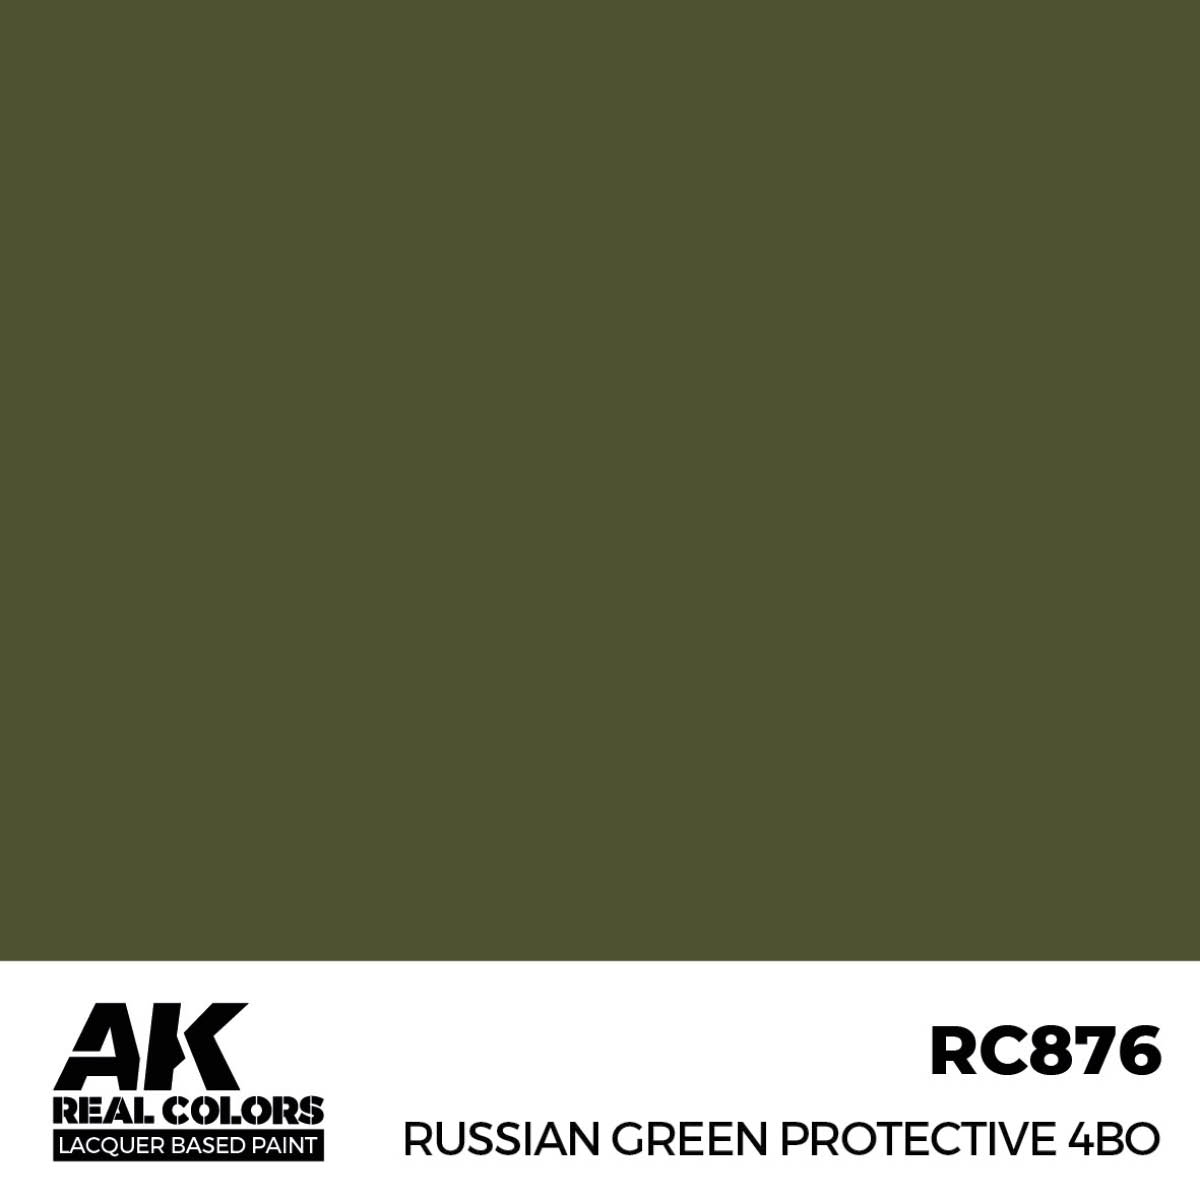 Russian Green Protective 4BO